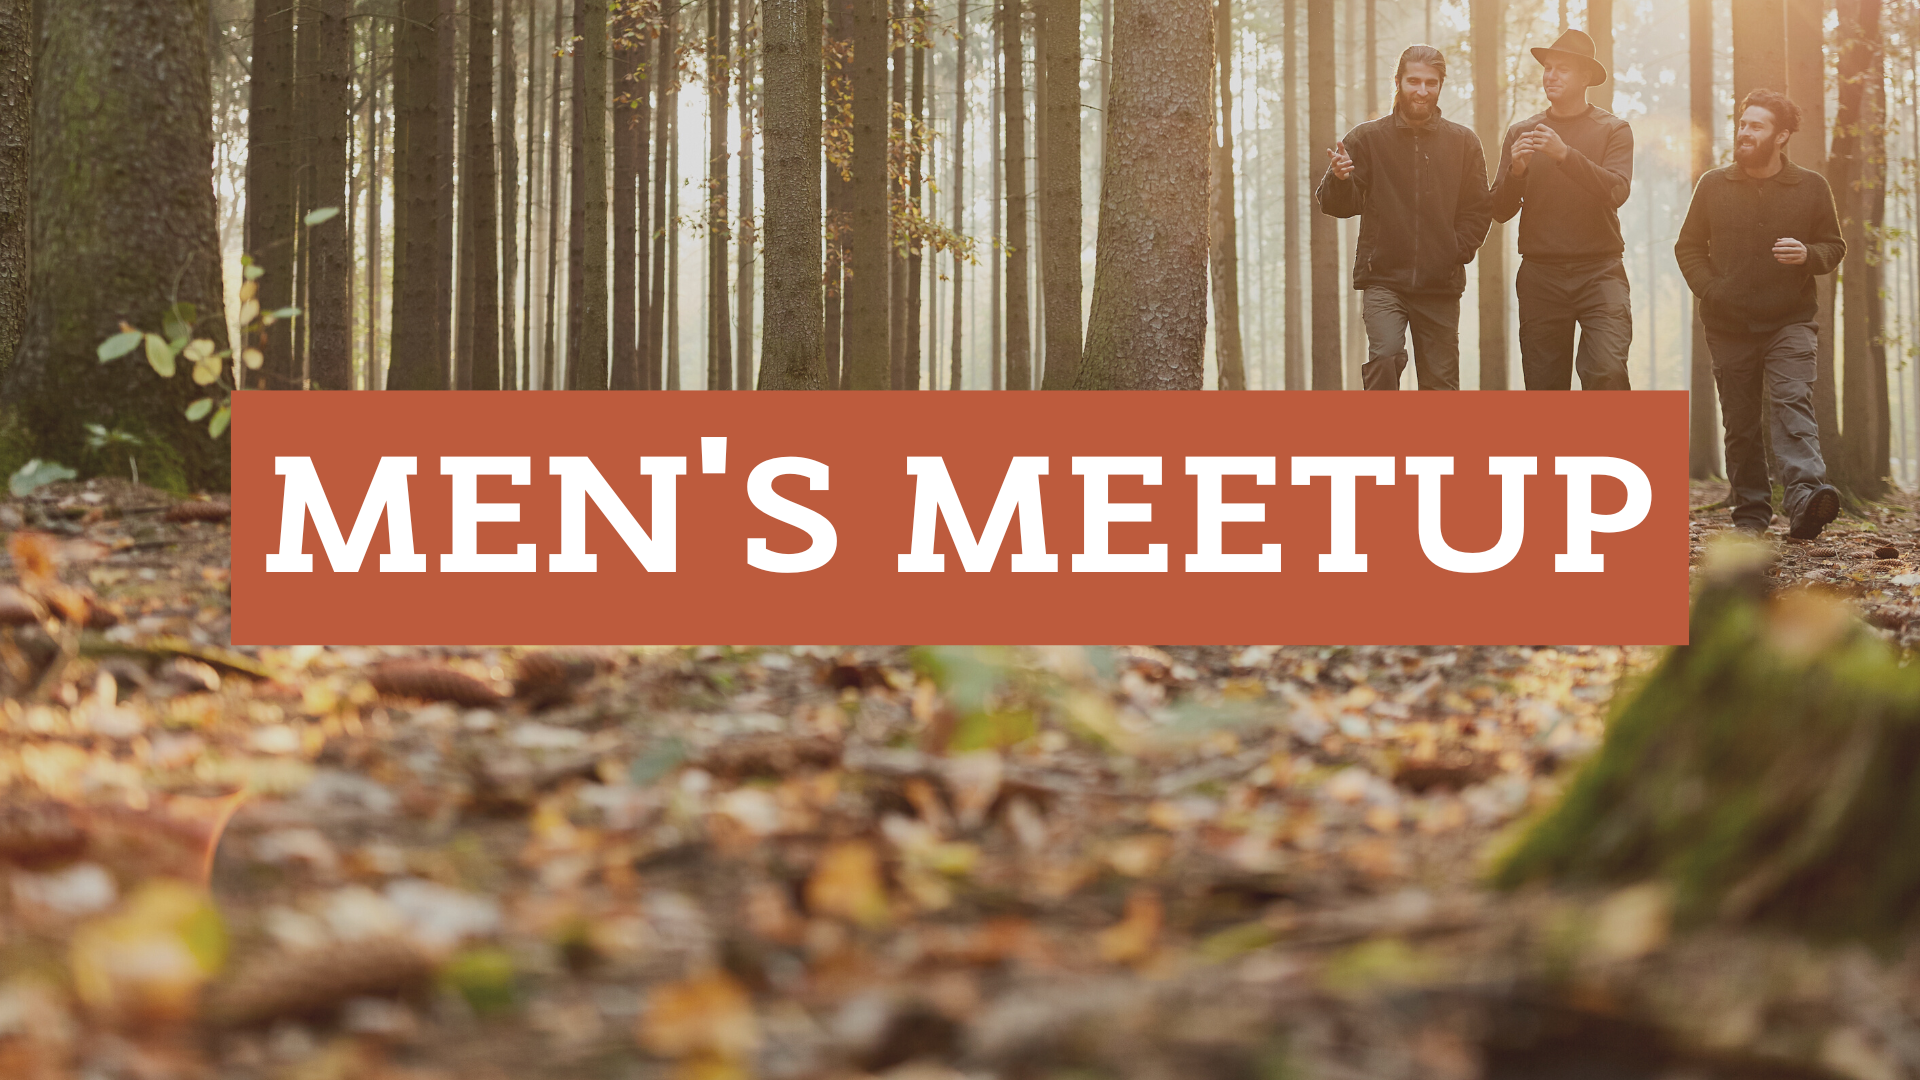 Men's meetup 10-23-22 image